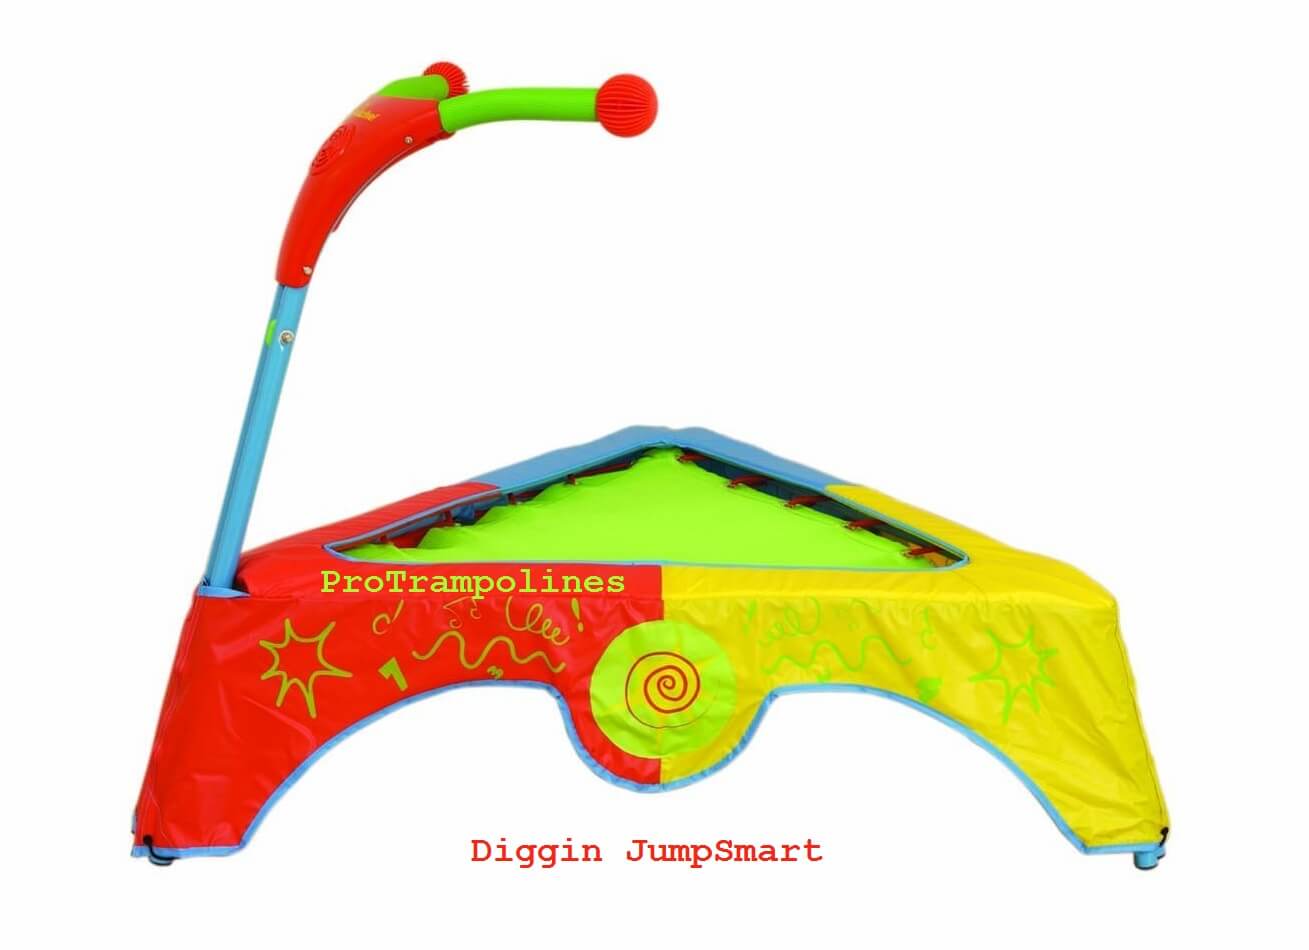 Diggin Jumpsmart traingle shaped mini trampoline for toddlers